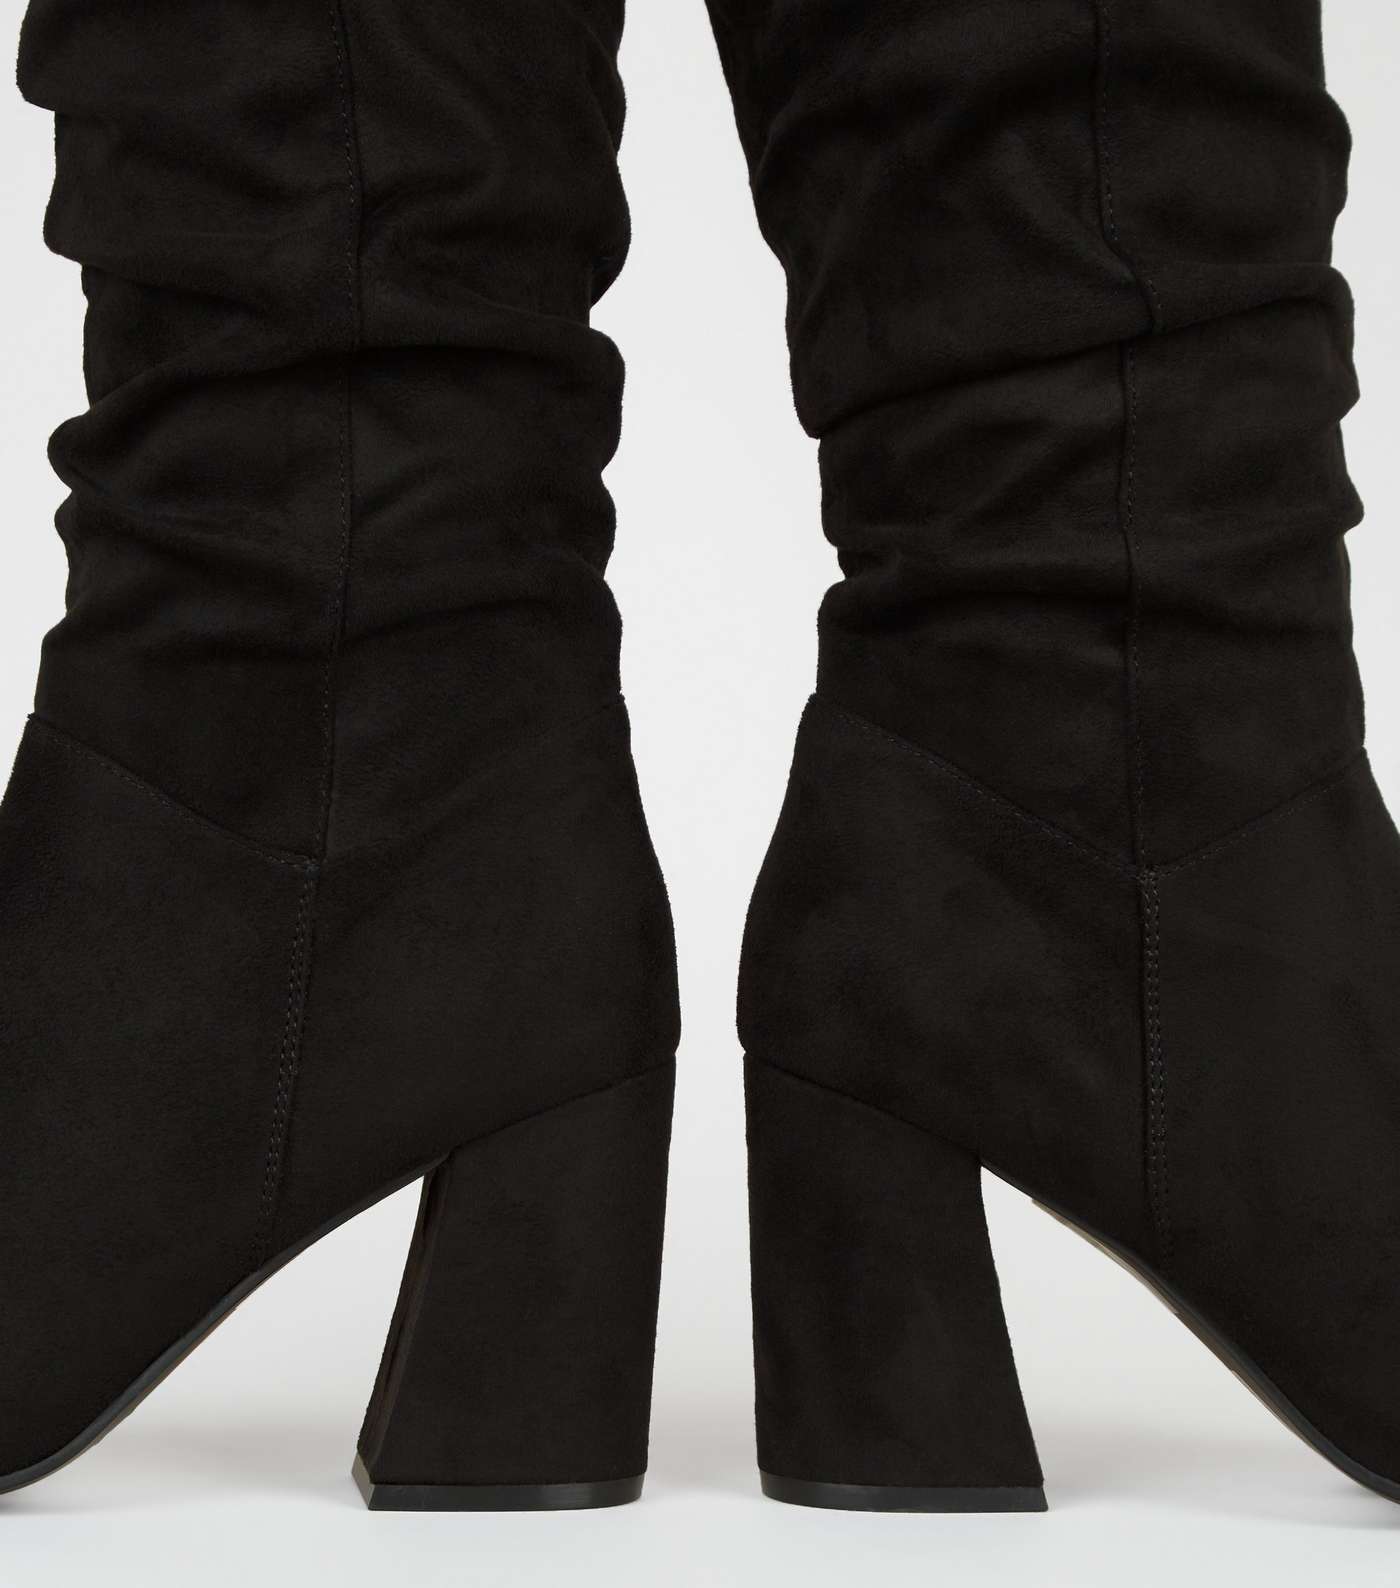 Black Suedette Knee High Heeled Boots Image 4